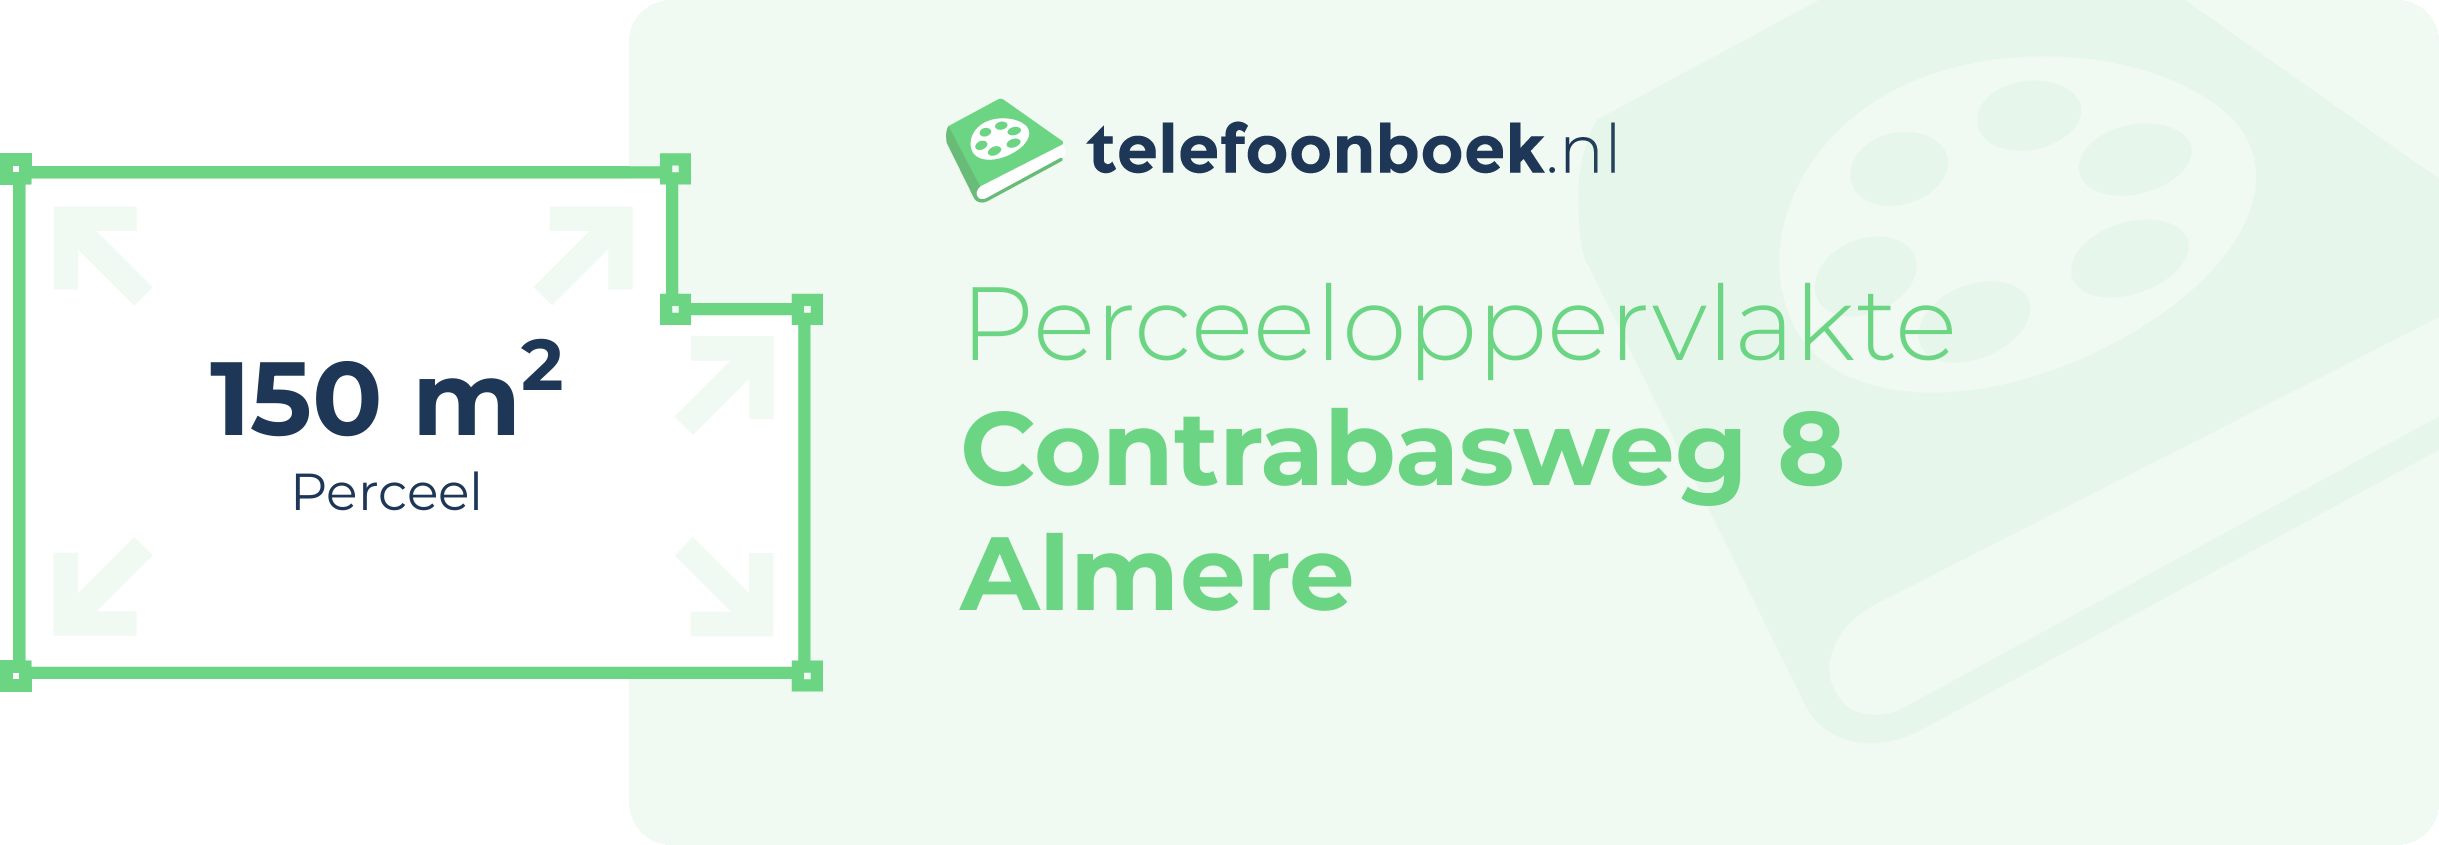 Perceeloppervlakte Contrabasweg 8 Almere